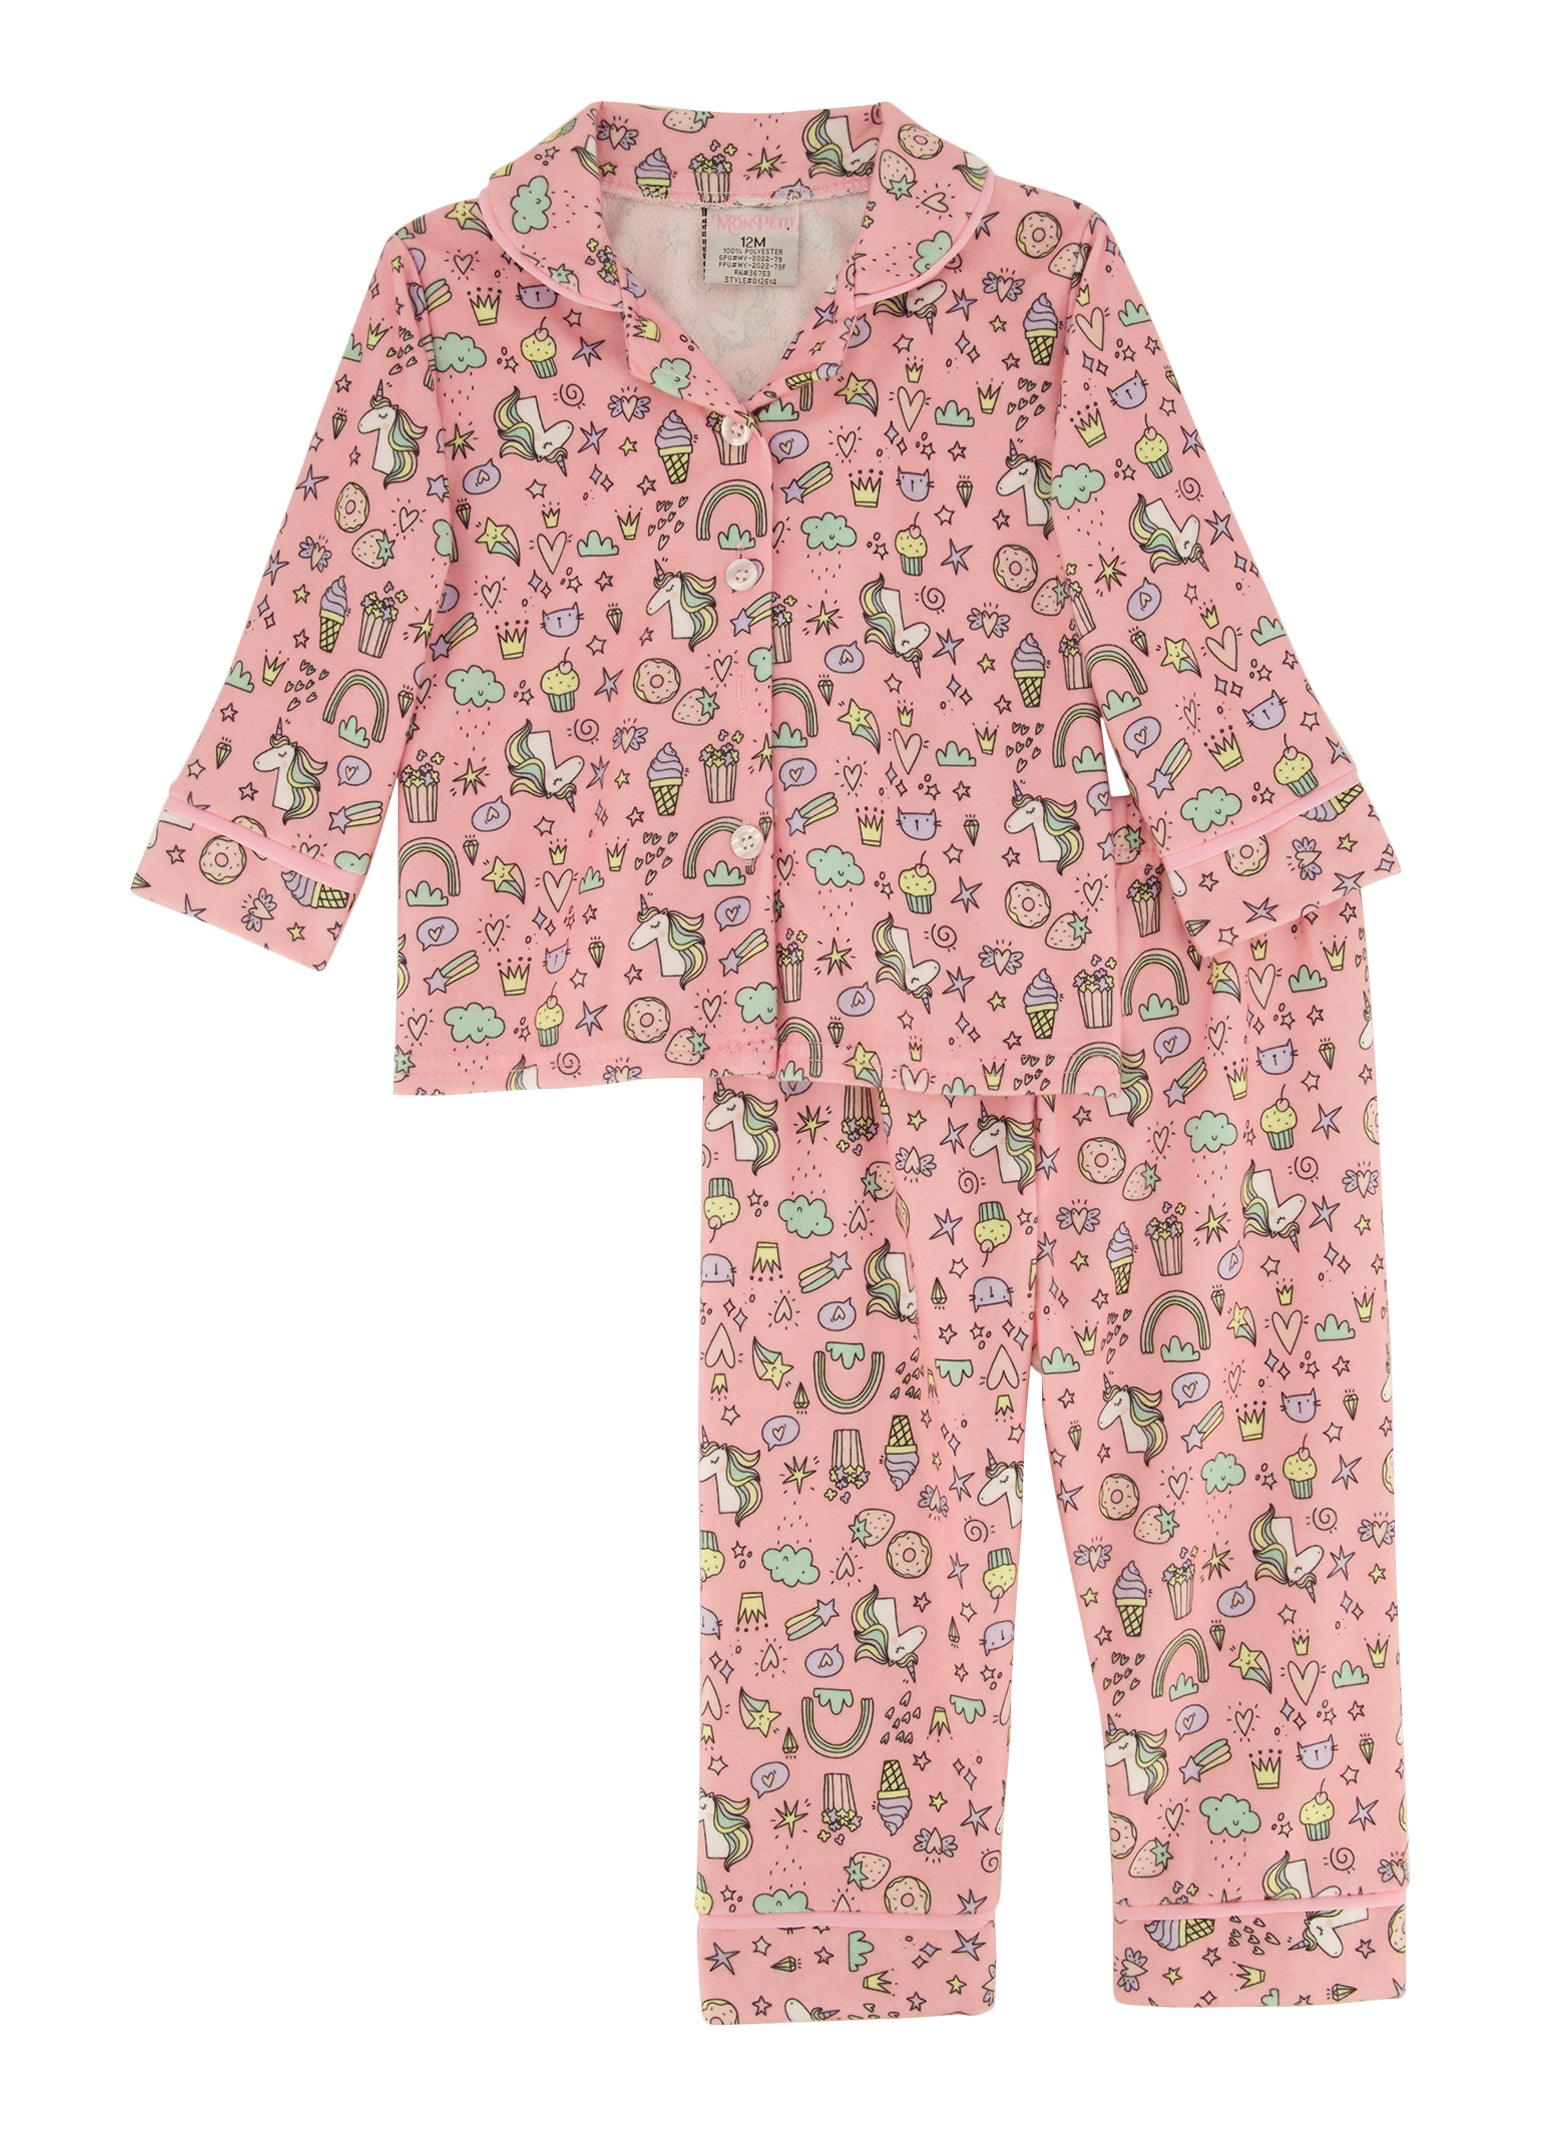 Wish Karo Cotton Printed Top & Bottom Pajama Set Night Dress for Boys